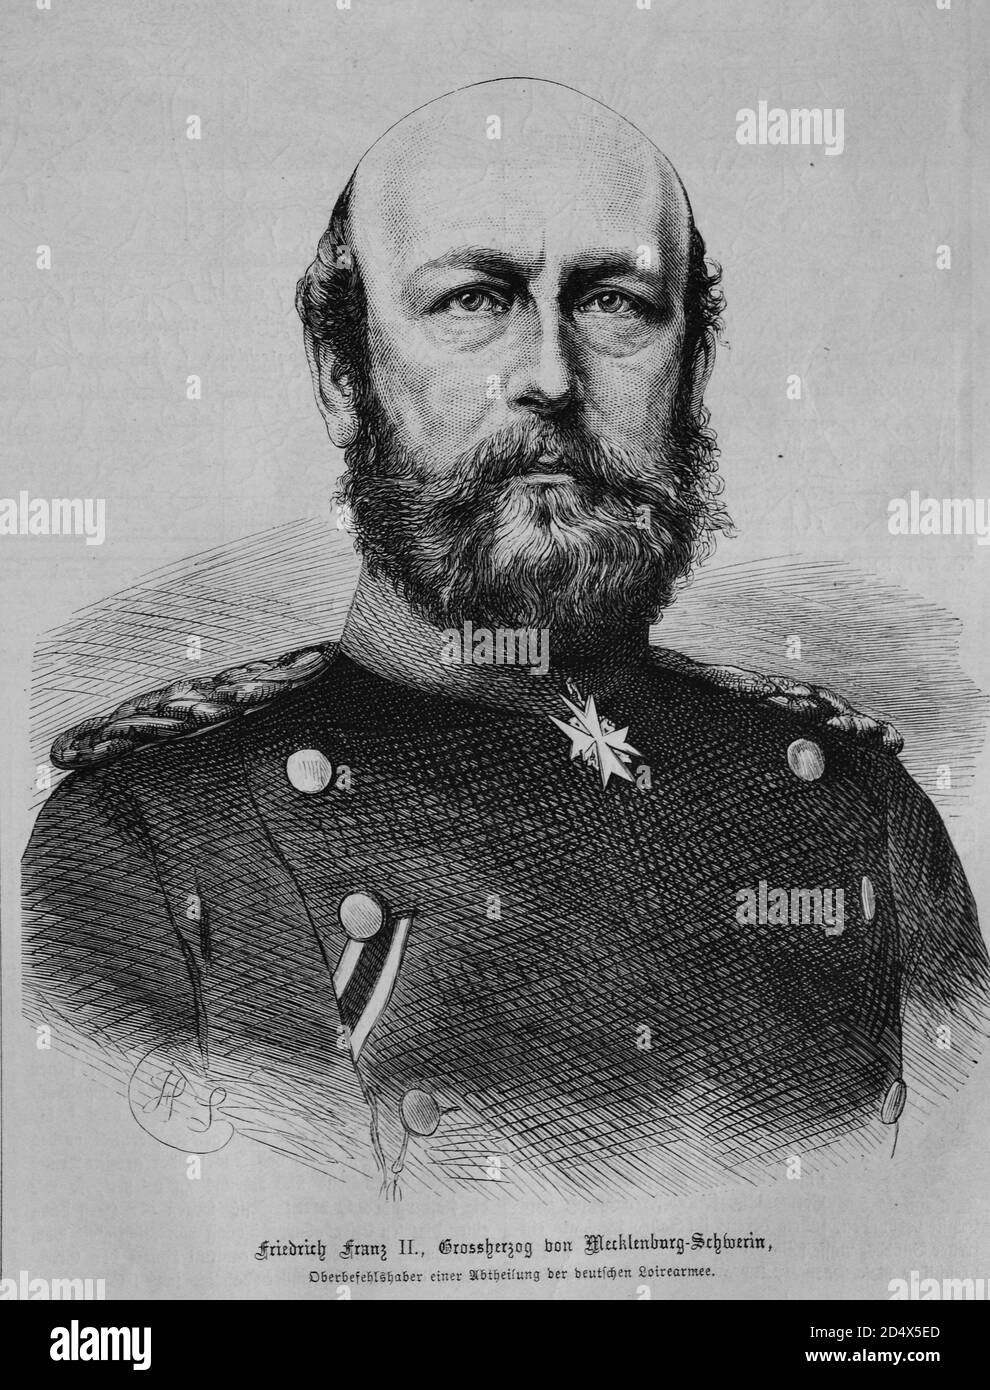 Friedrich Franz II, gran duque de Mecklenburg-Schwerin, la historia de la guerra ilustrada, la guerra alemana - francesa 1870-1871 Foto de stock